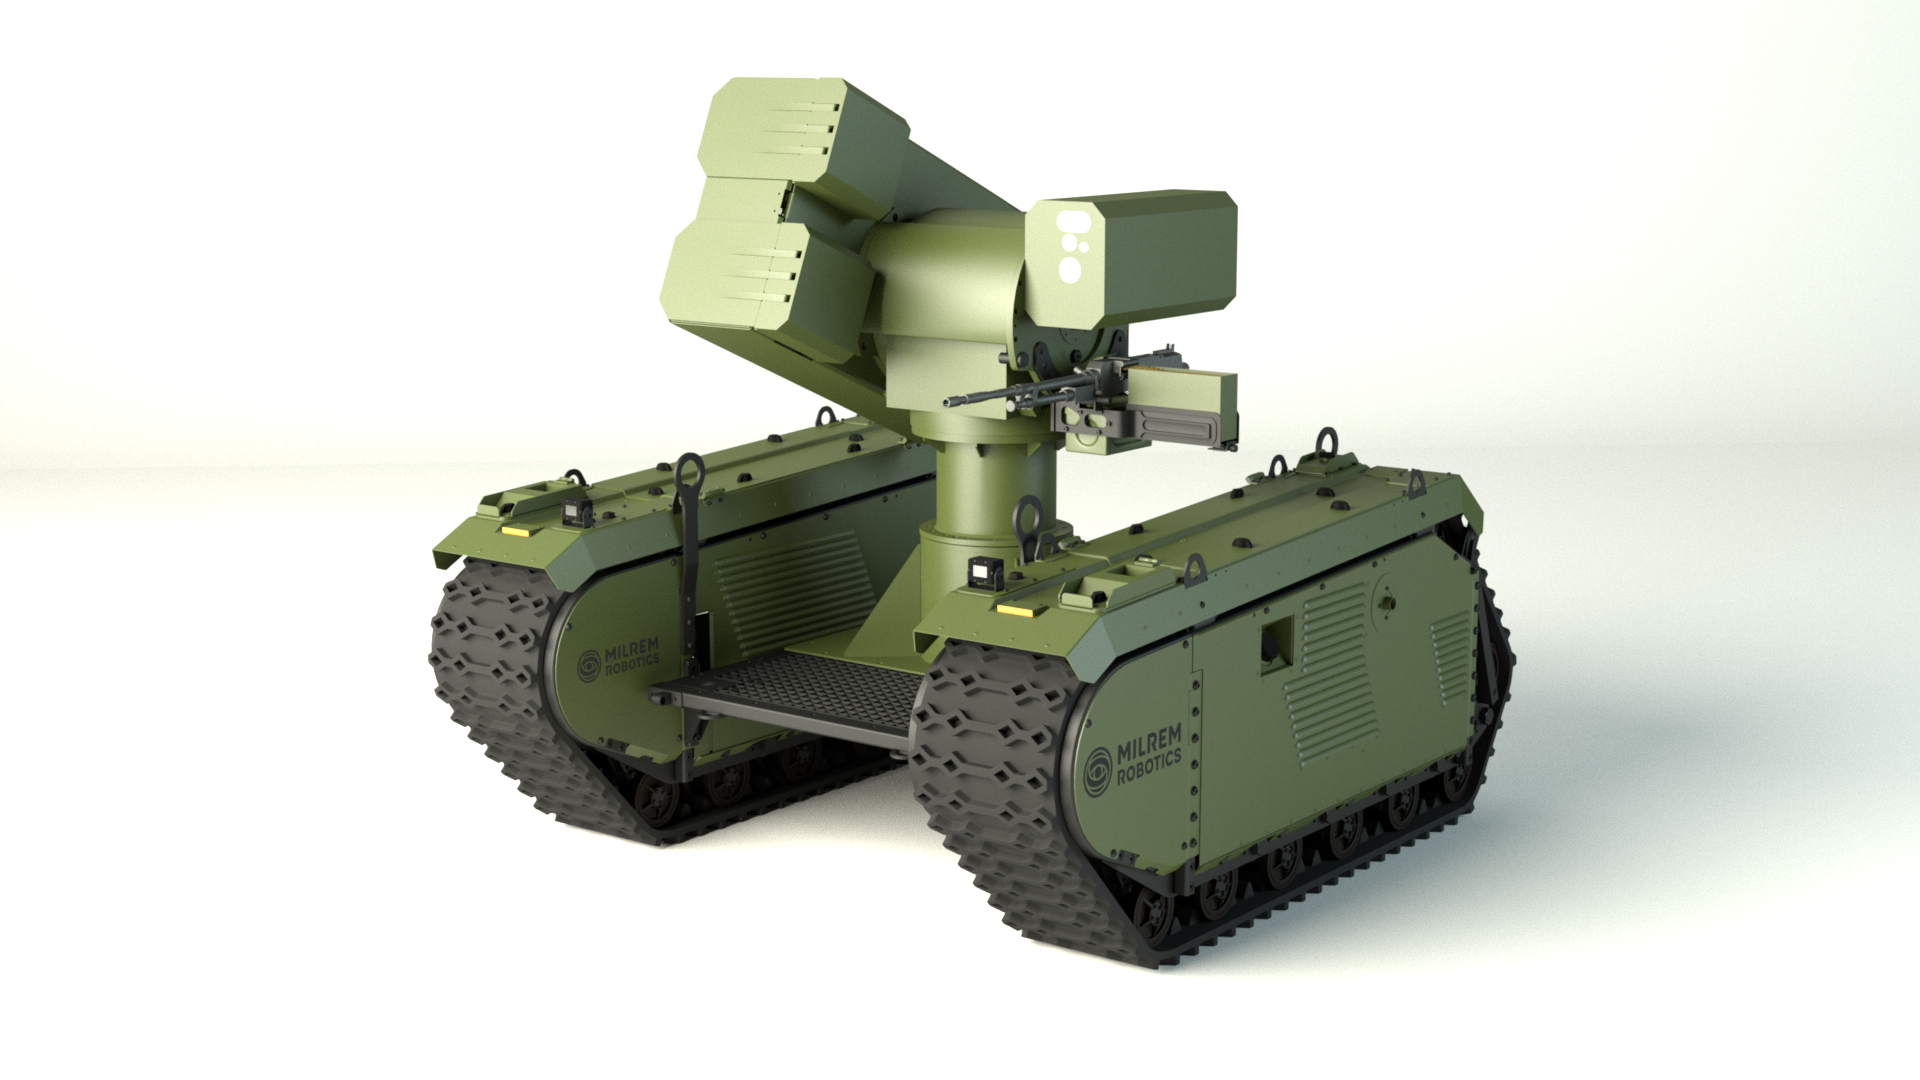 Company Milrem Robotics designed the first anti-tank